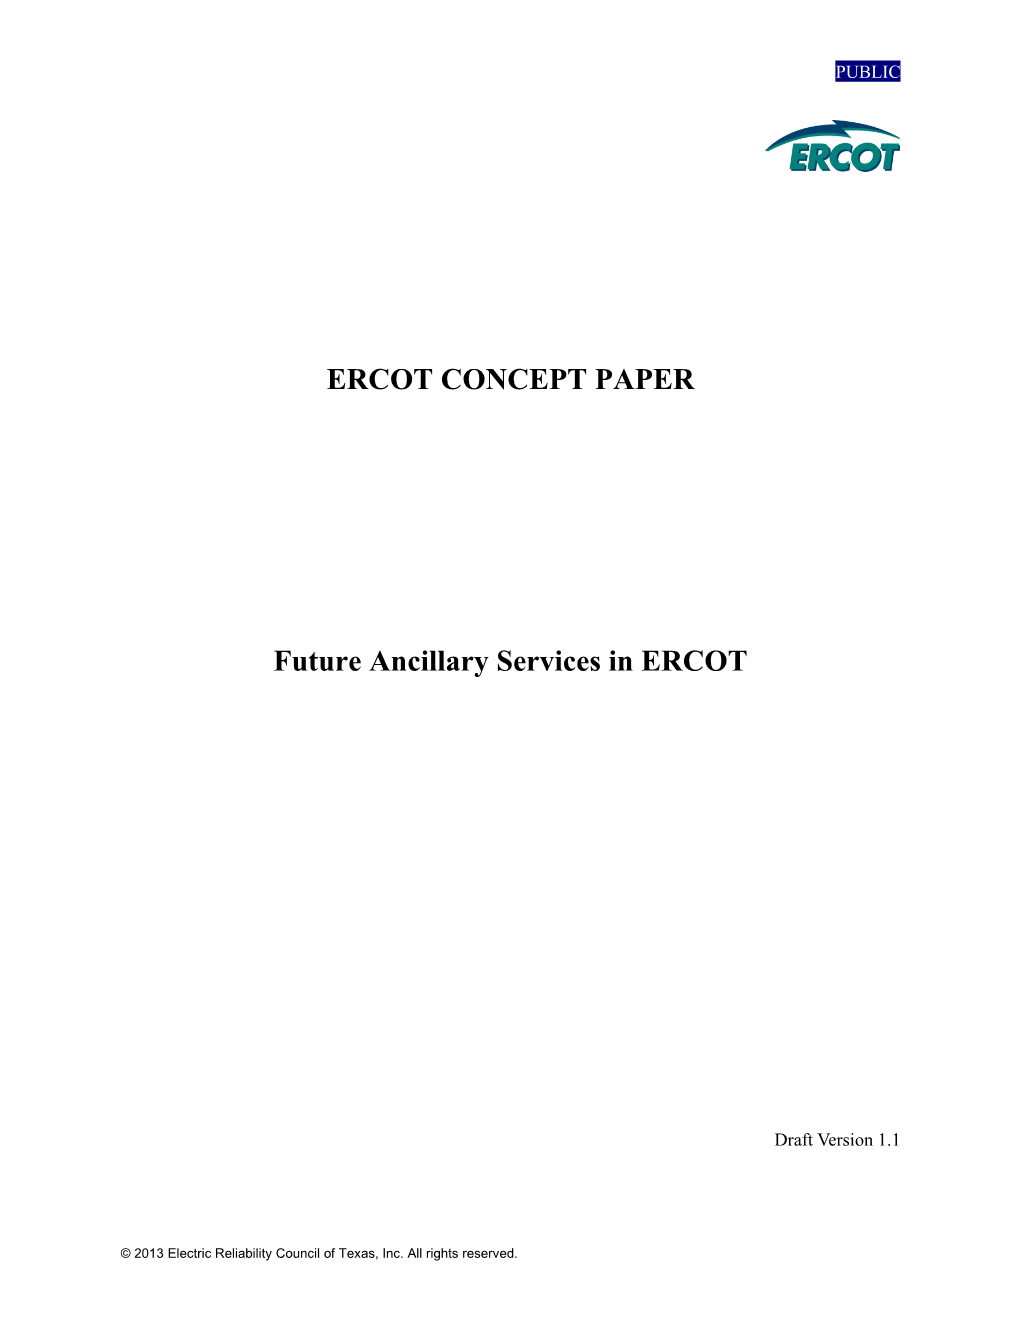 Future Ancillary Services in ERCOT